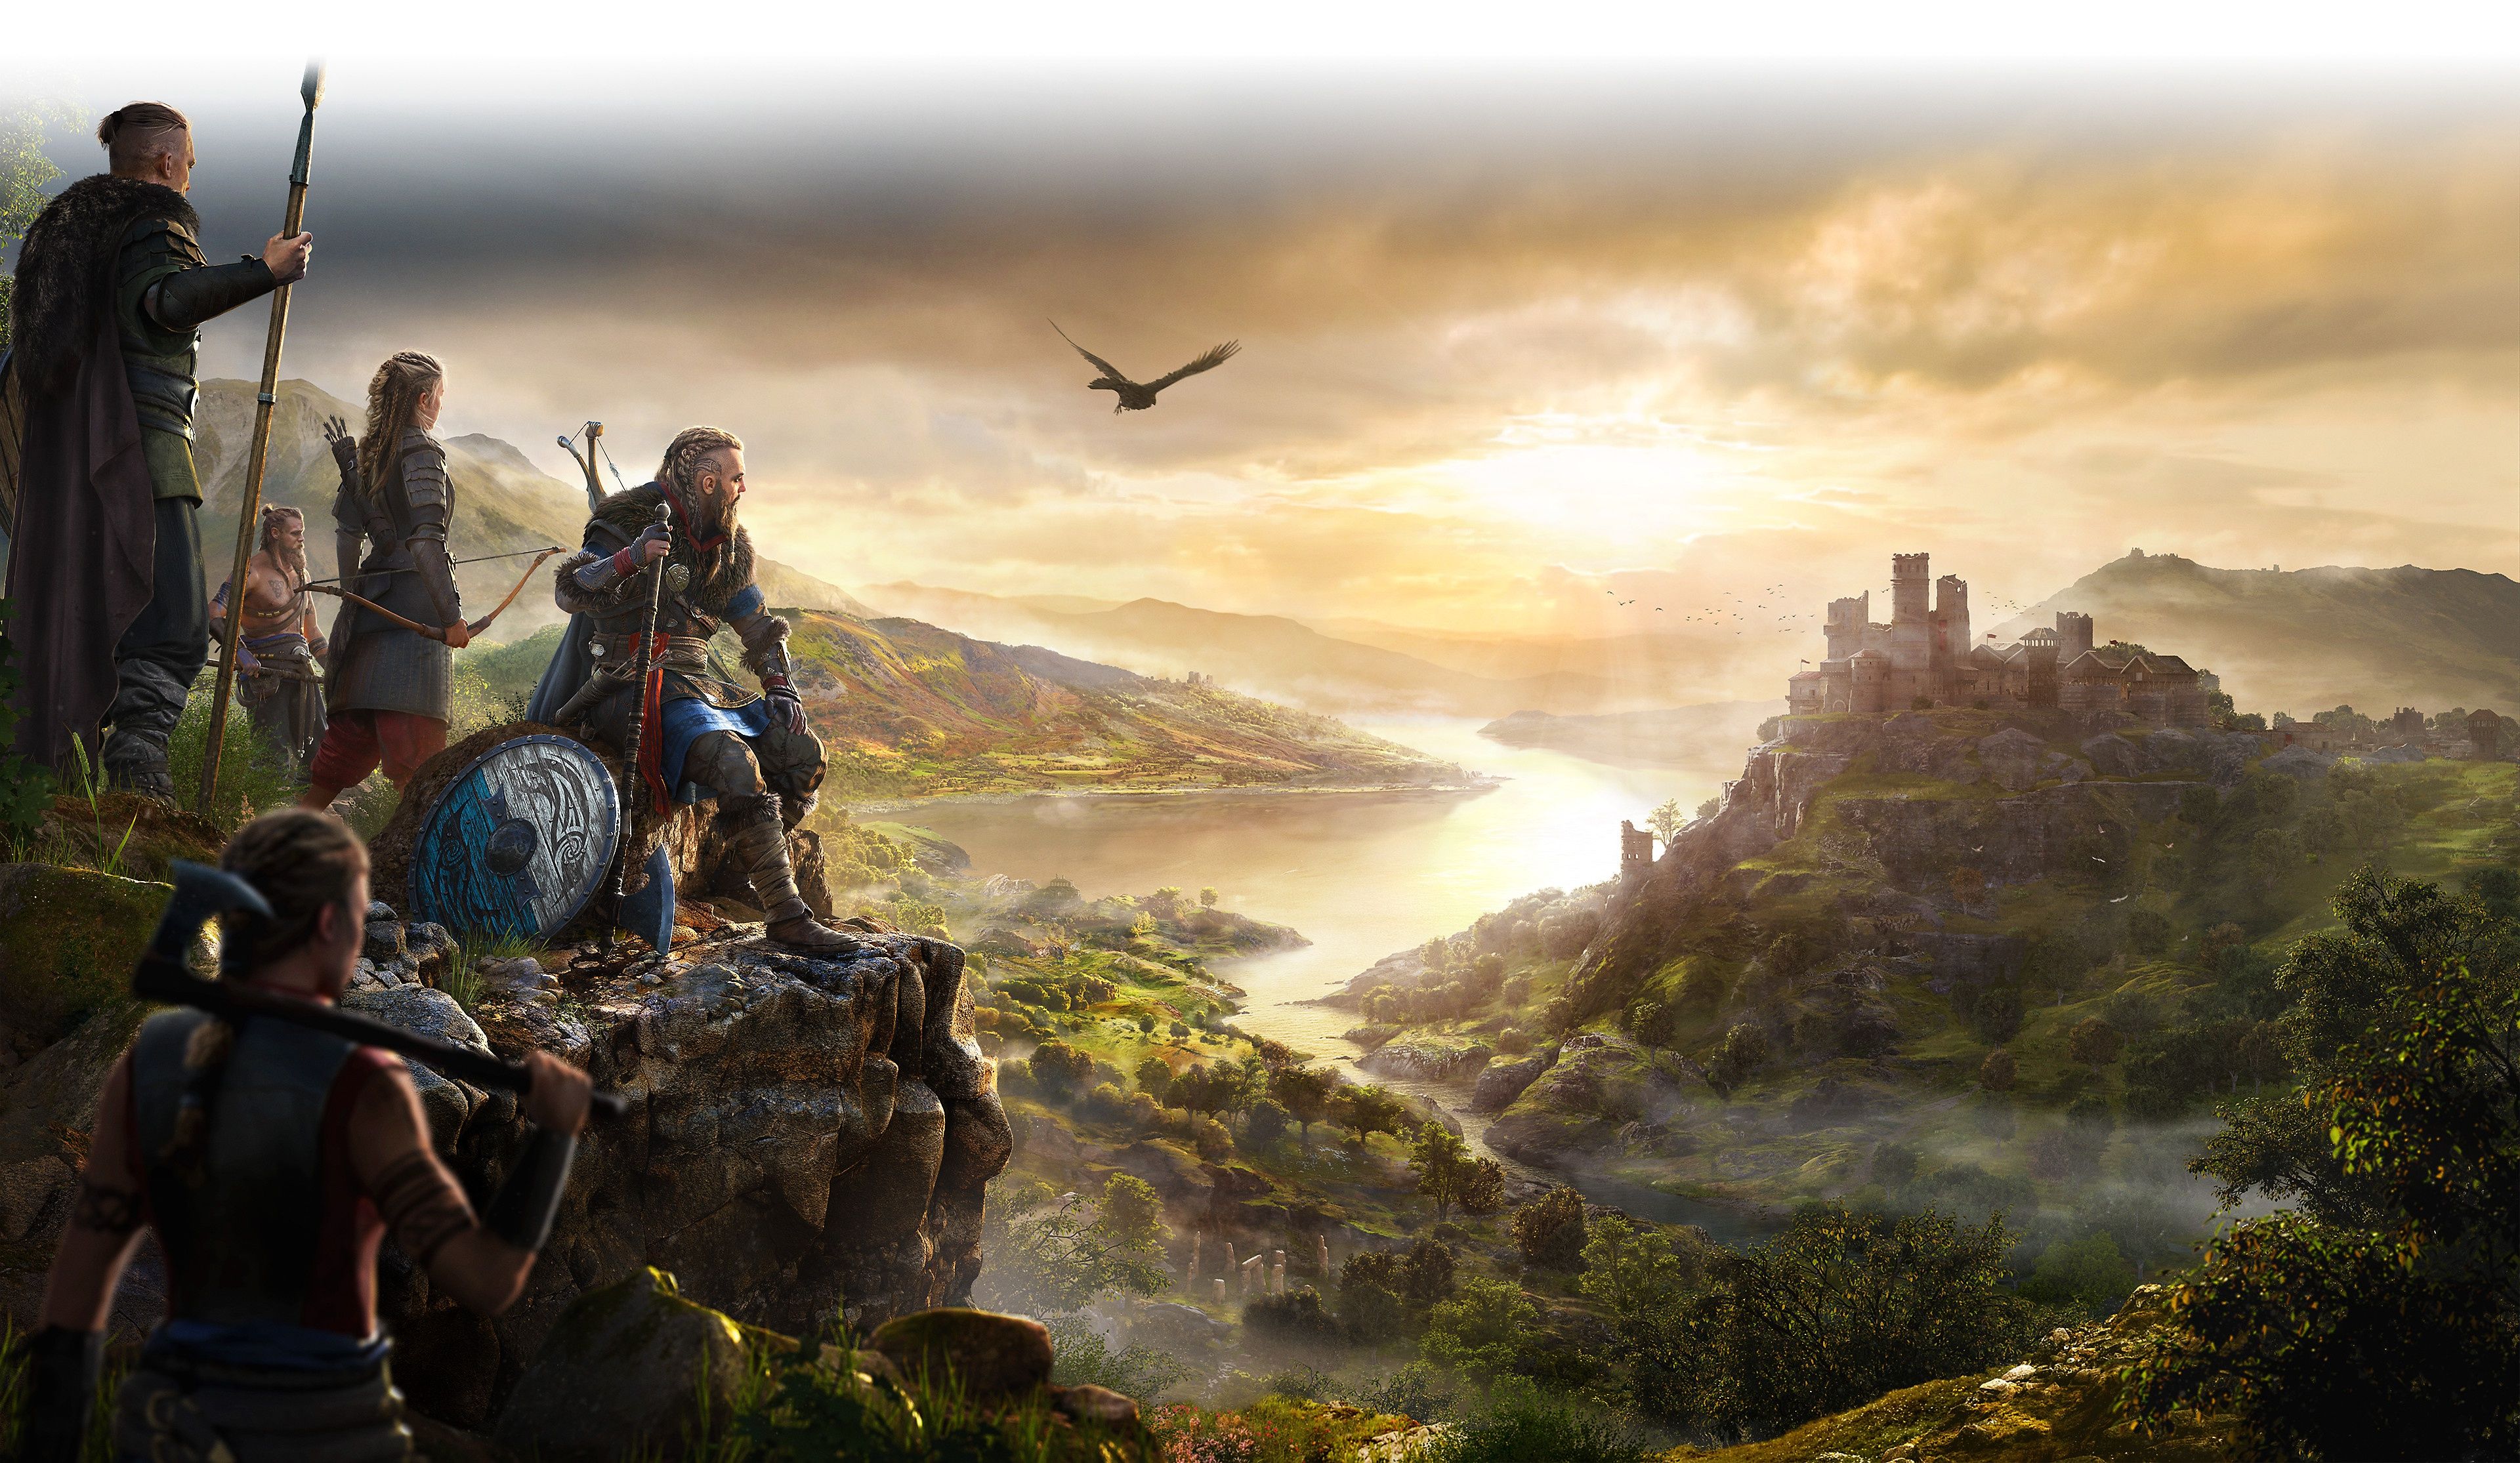 Assassin's Creed Valhalla 4K Wallpaper, Vikings, Gameplay, 2020 Games, Games